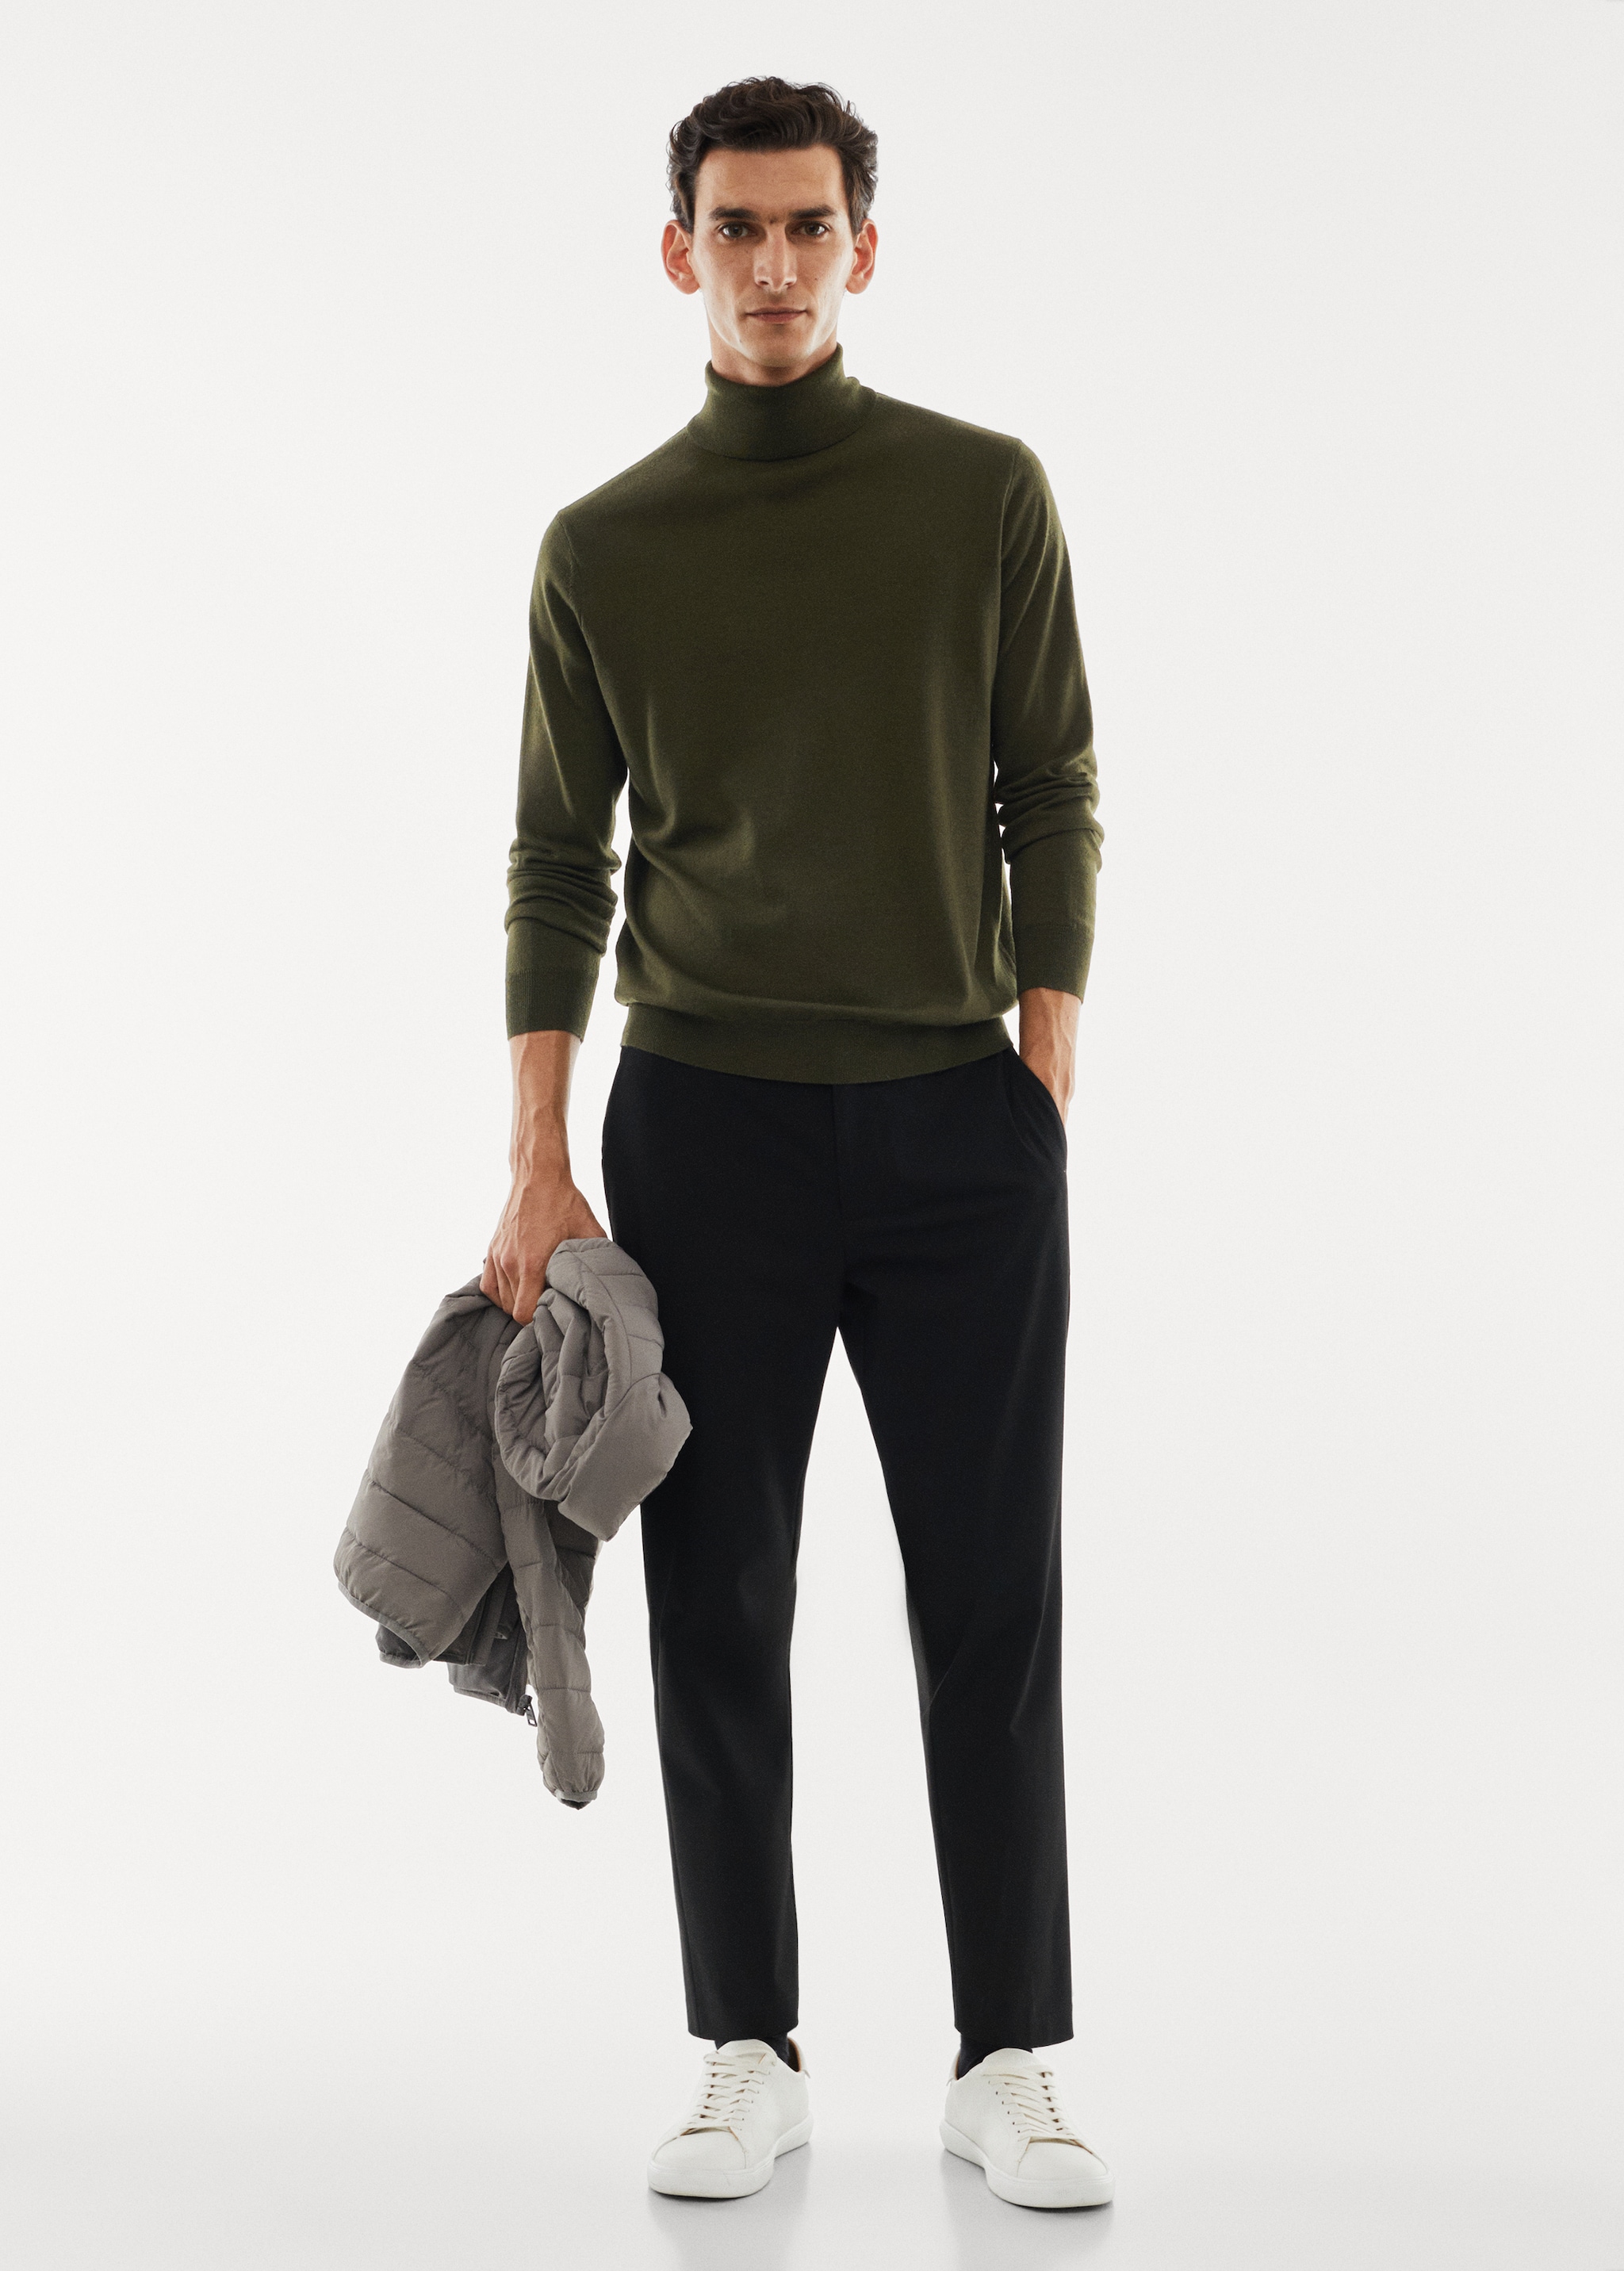 100% merino wool turtleneck sweater - General plane